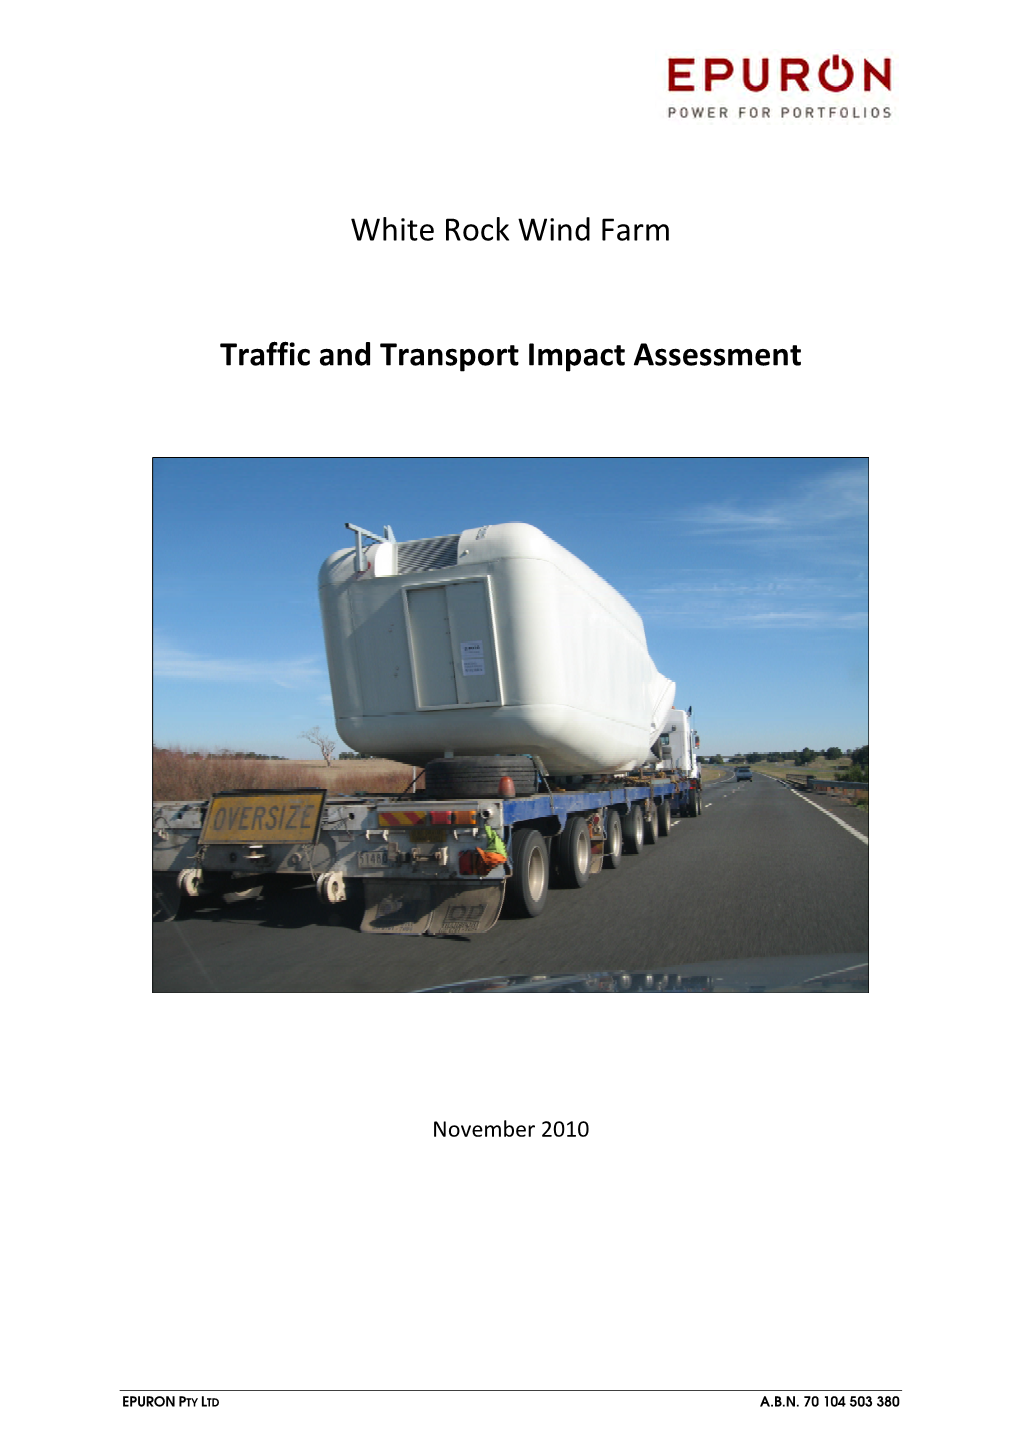 Traffic & Transport Impact Assessment